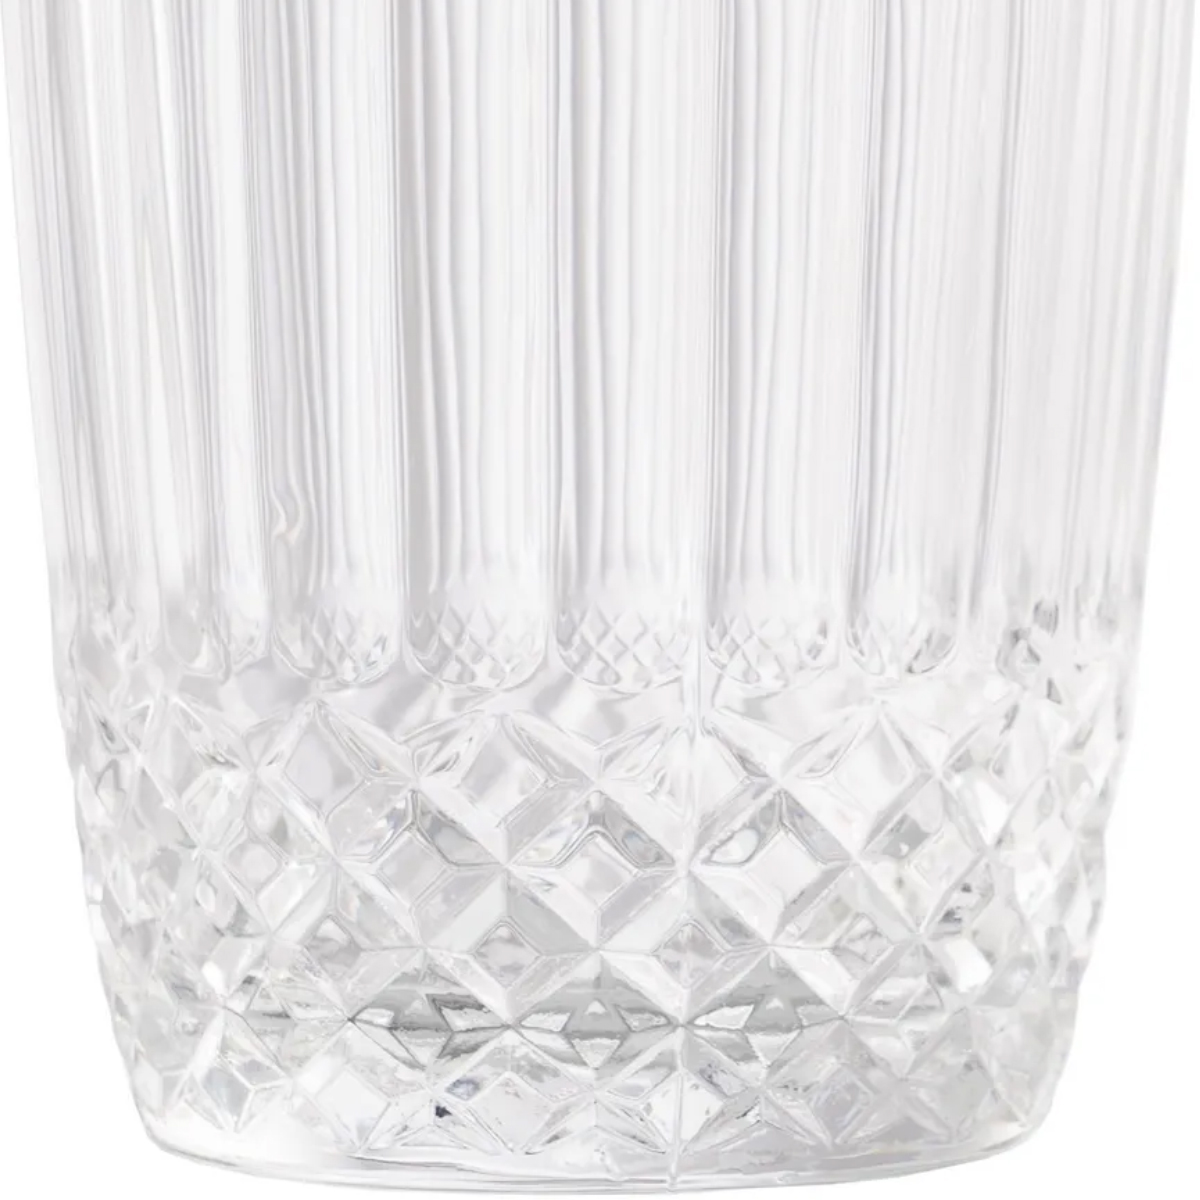 Large glass 380 ml